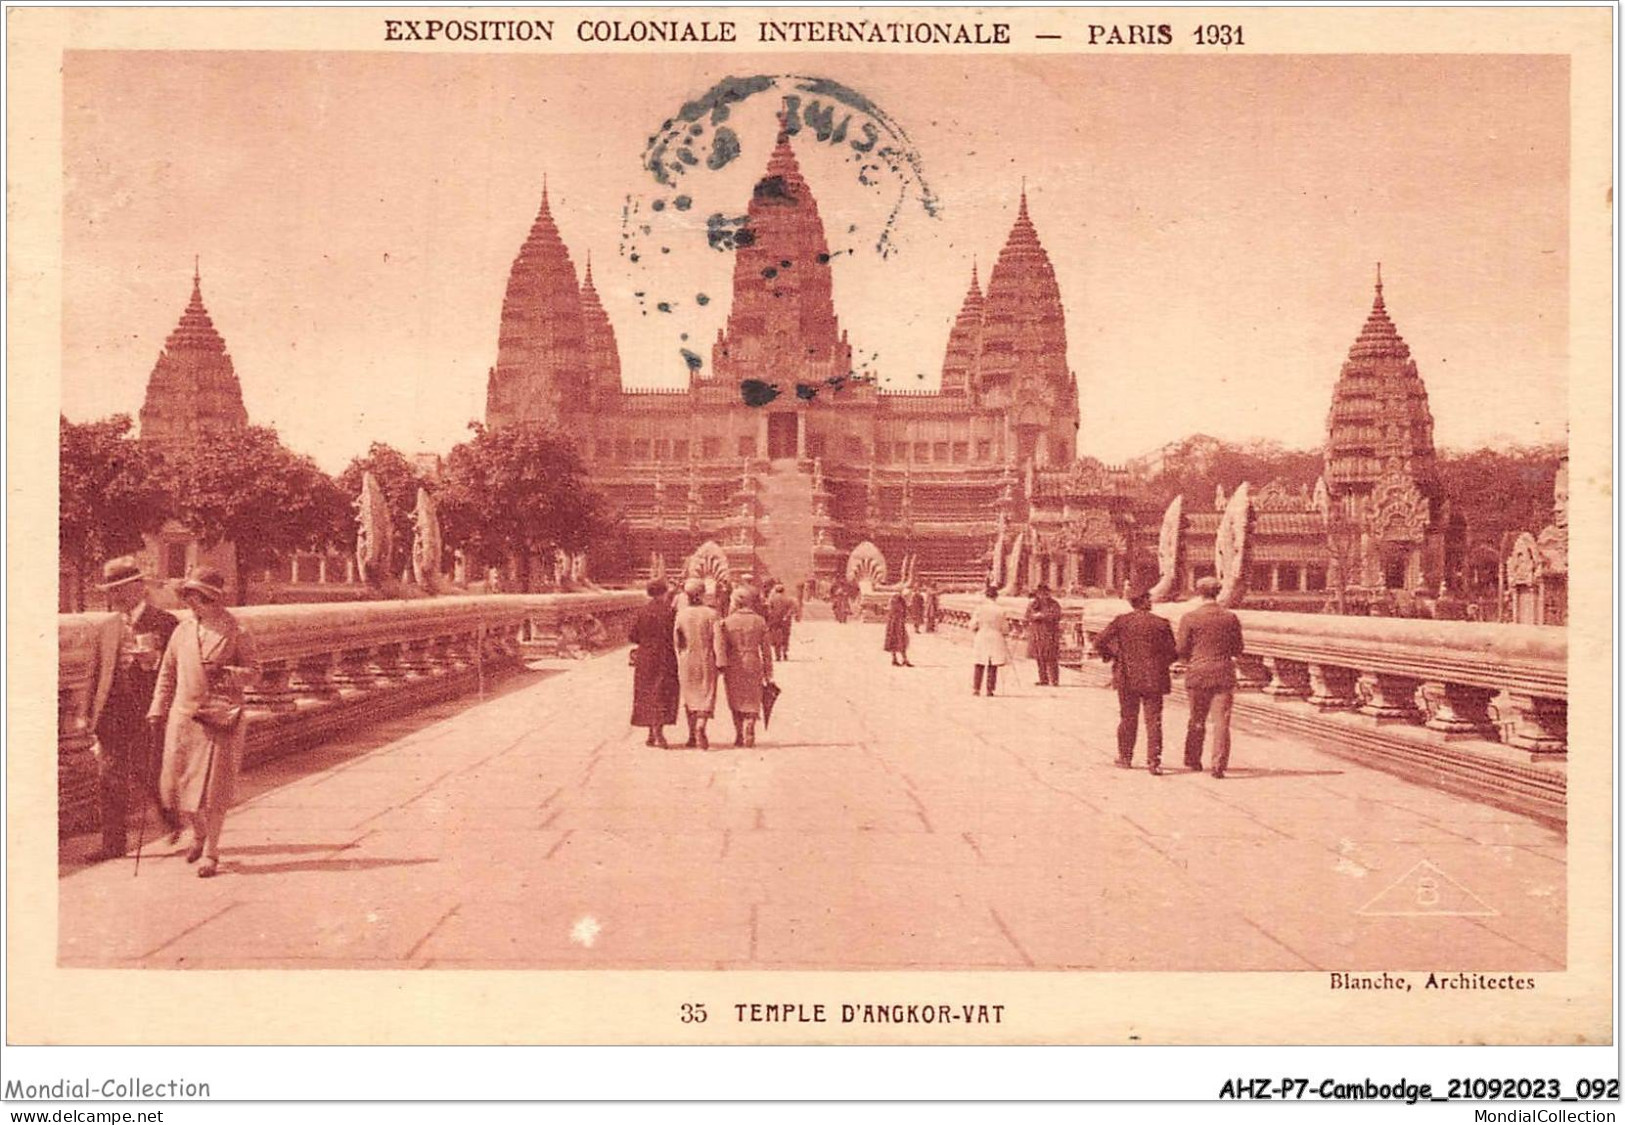 AHZP7-CAMBODGE-0642 - EXPOSITION COLONIALE INTERNATIONALE - PARIS 1931 - TEMPLE D'ANGKOR-VAT - Cambodia